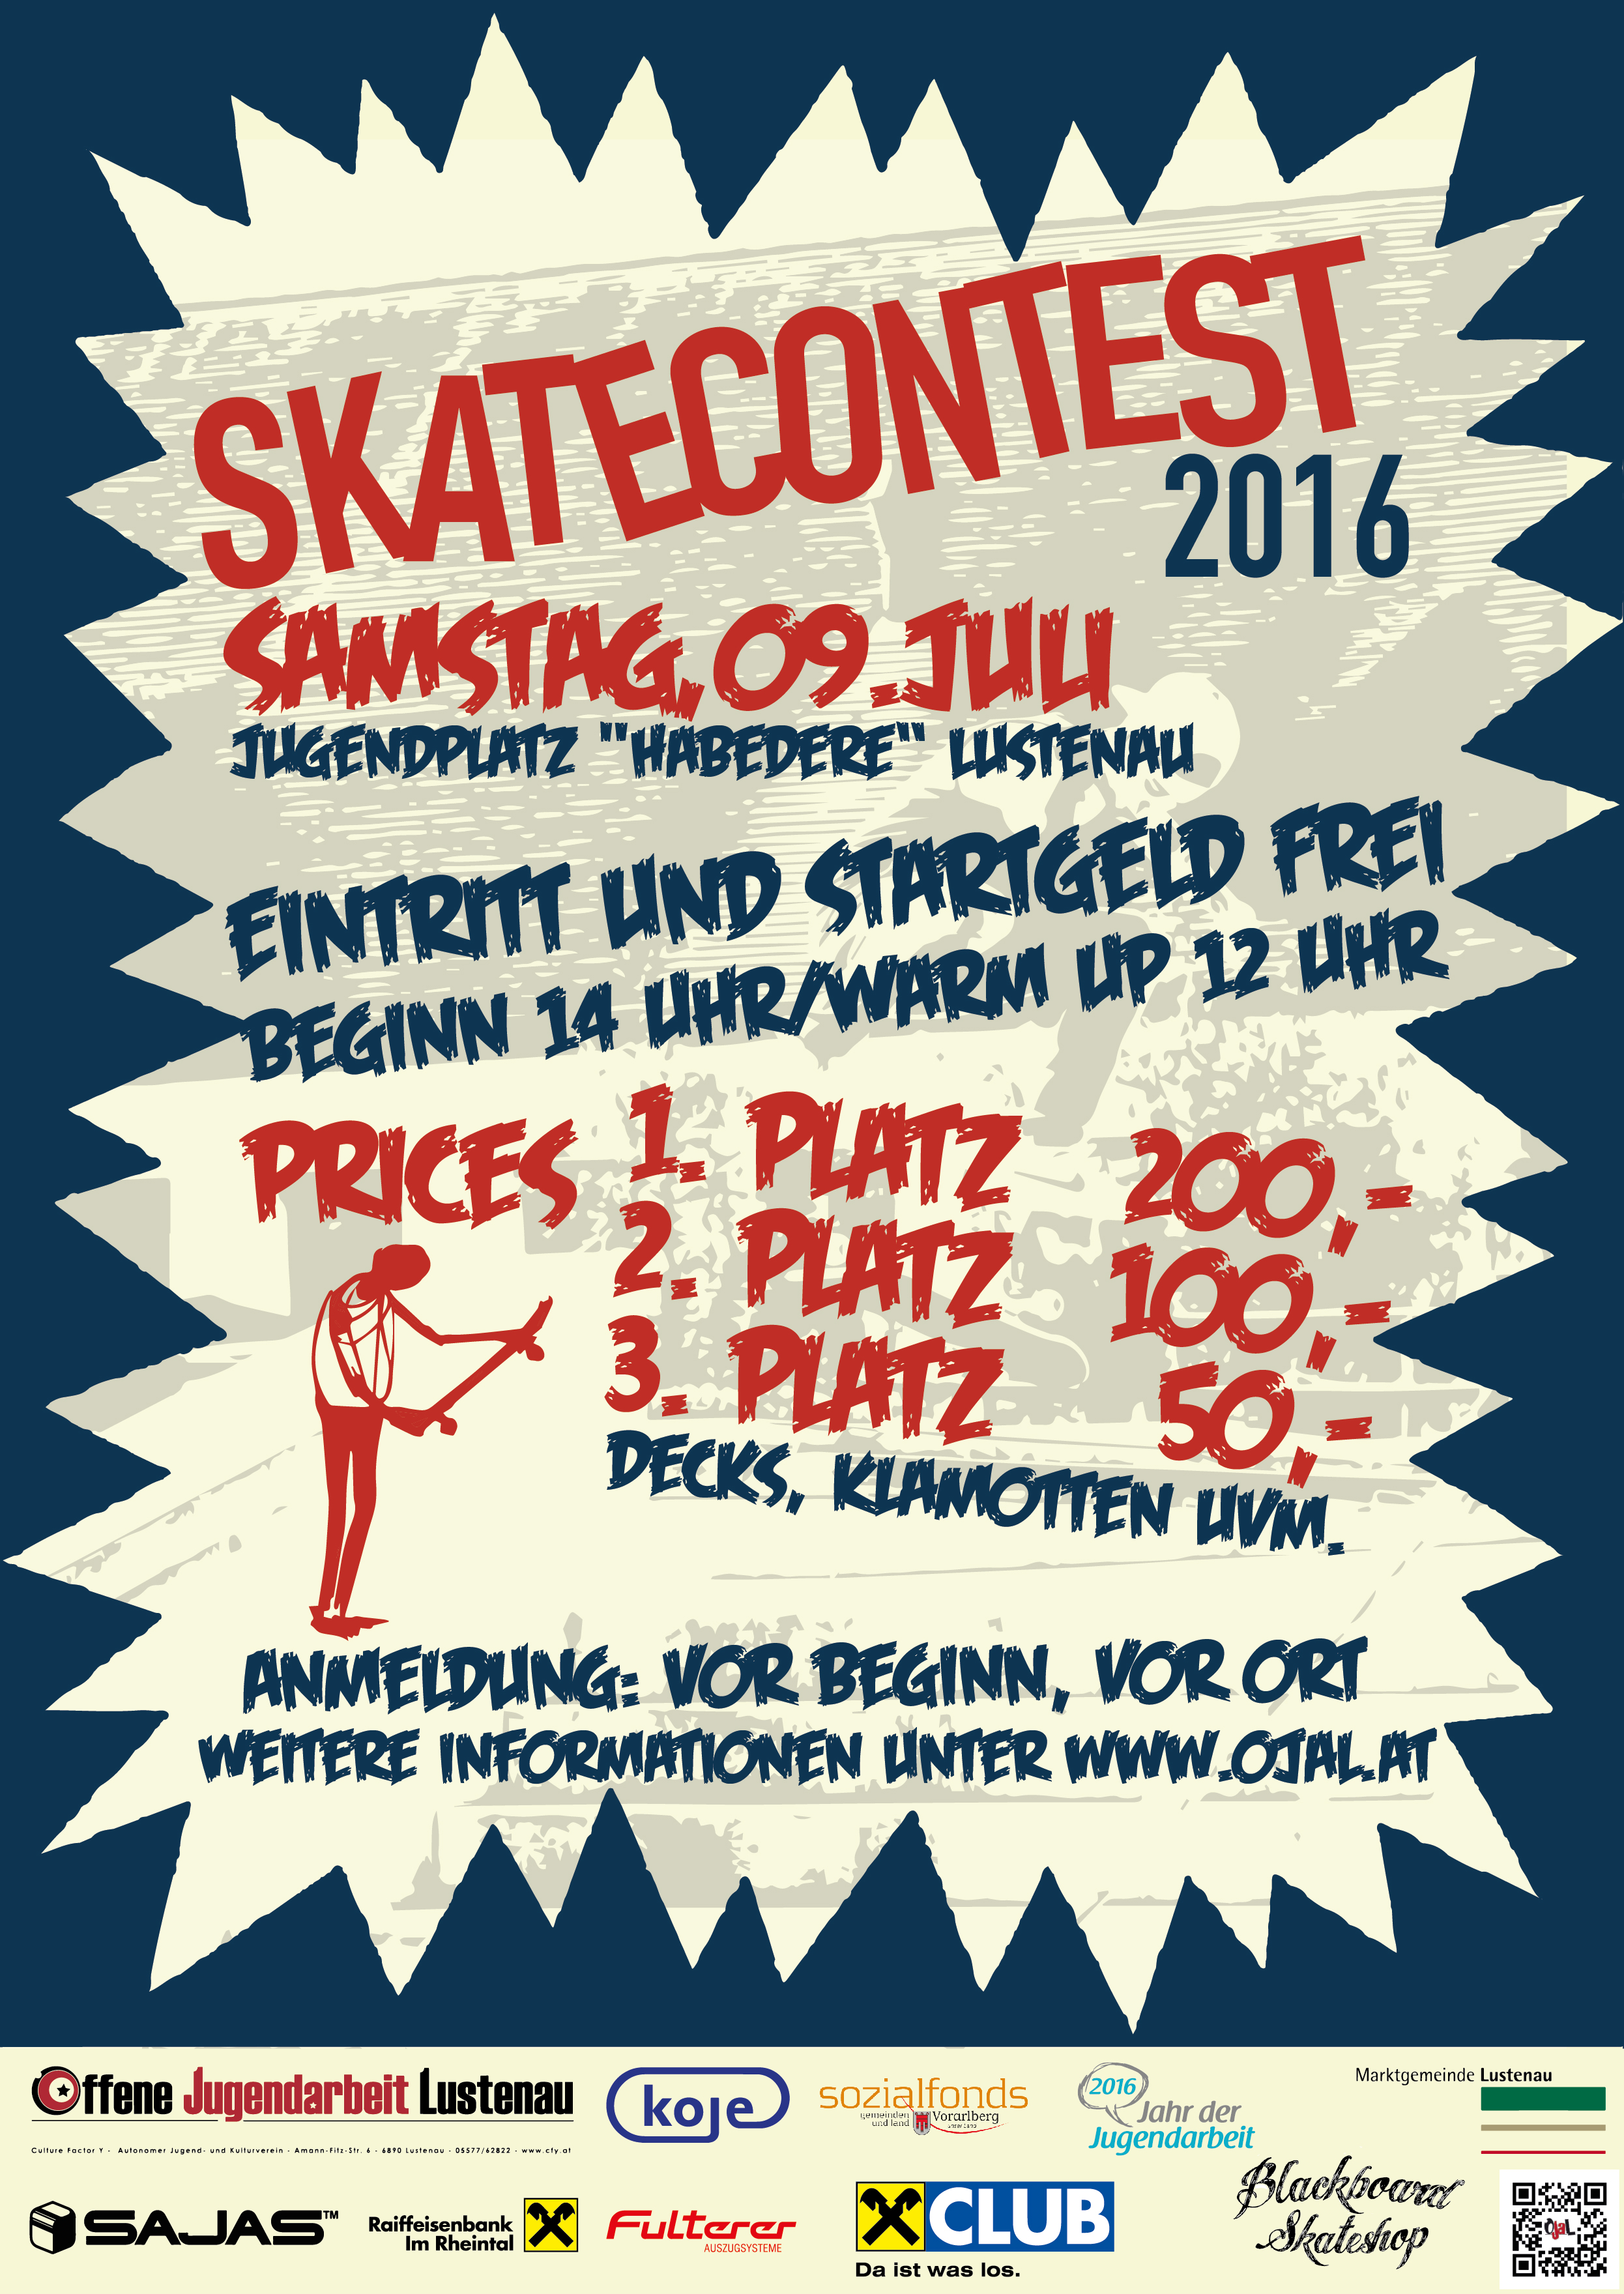 Skatecontest 2016 A2 RGB-01